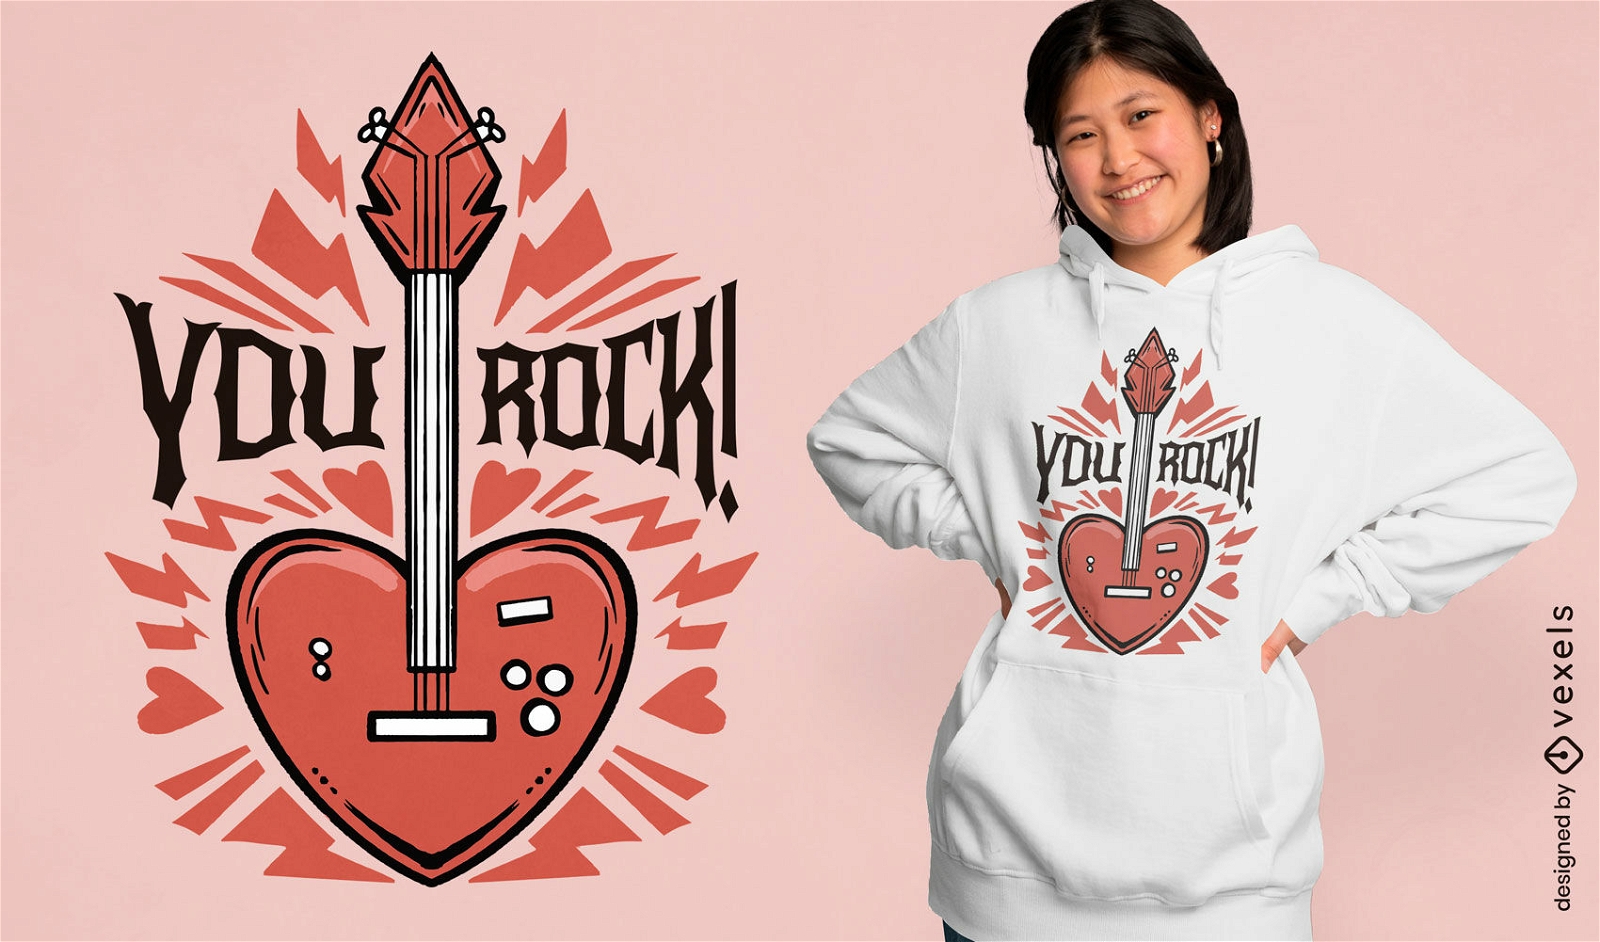 Rock and romance guitar t-shirt design